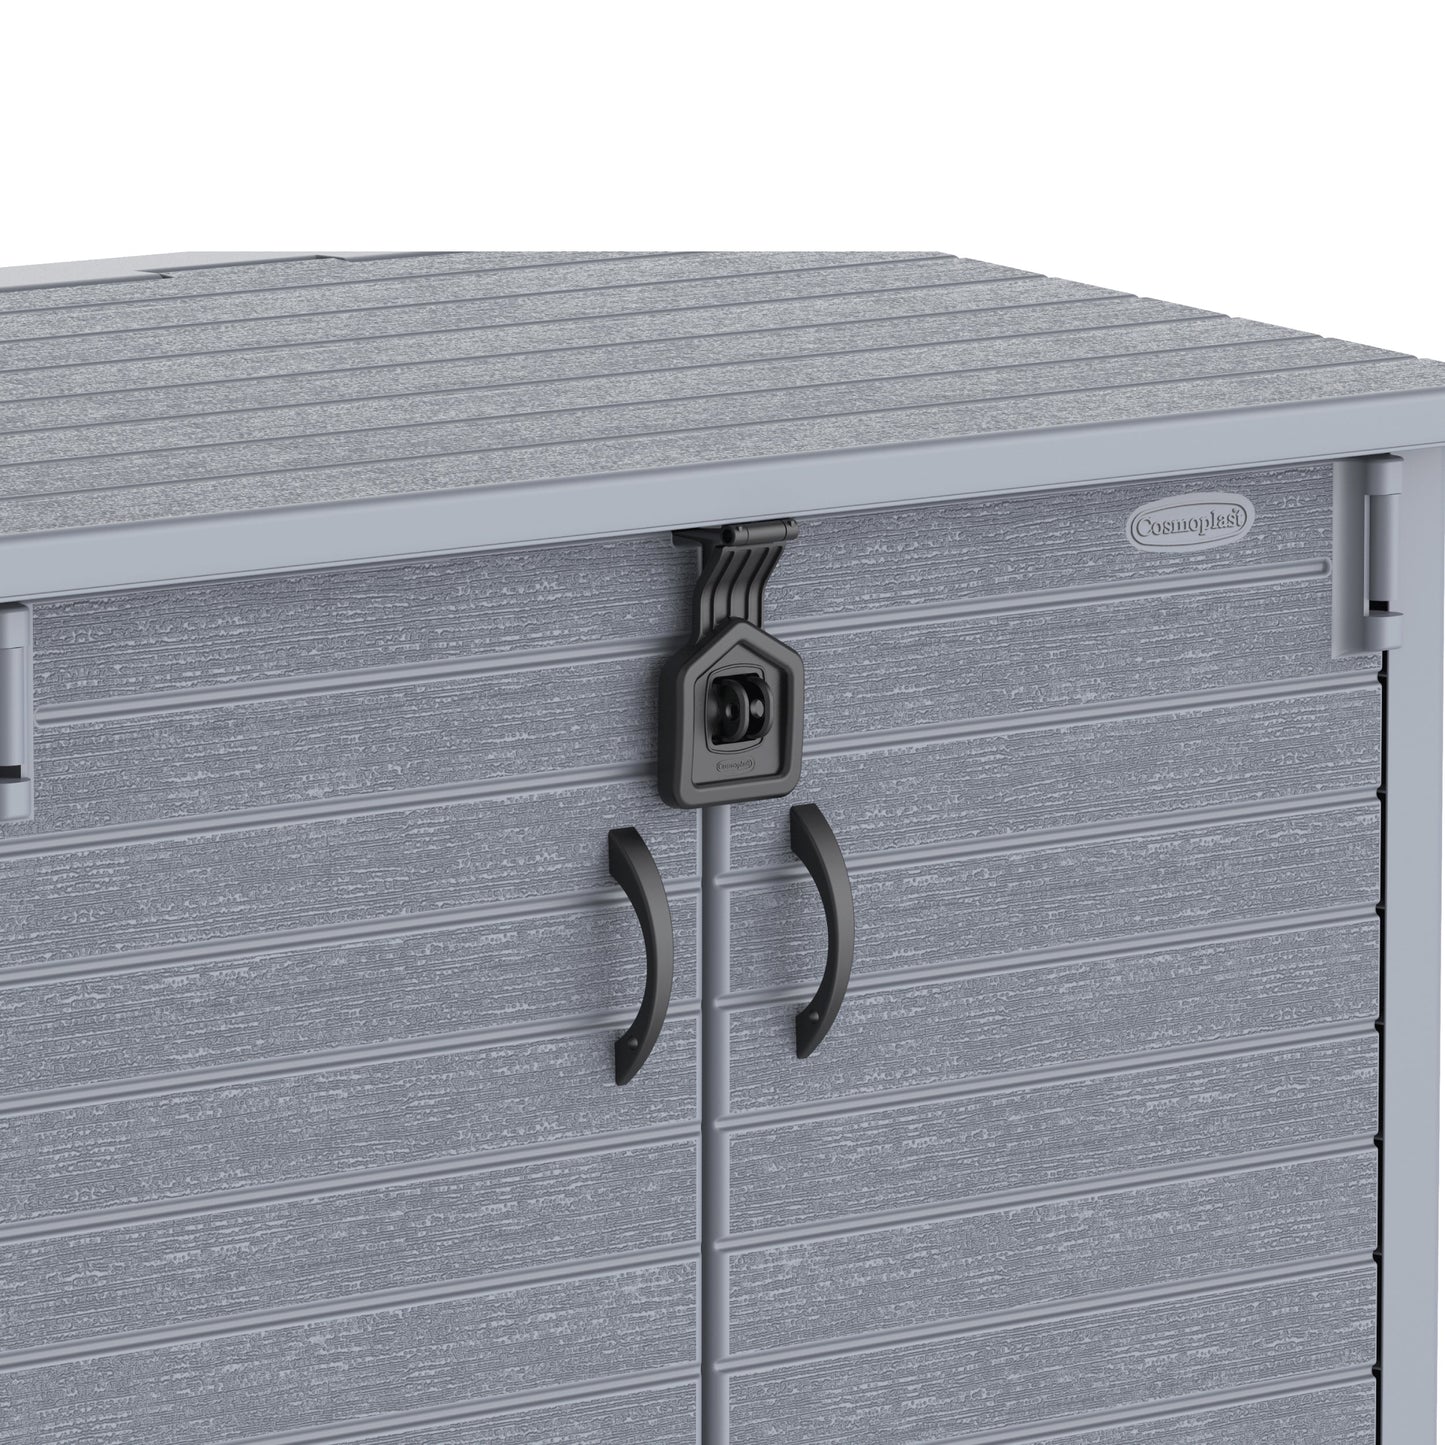 Cedargrain 850L Small Storage Shed + 120L Outdoor Waste Bins x2